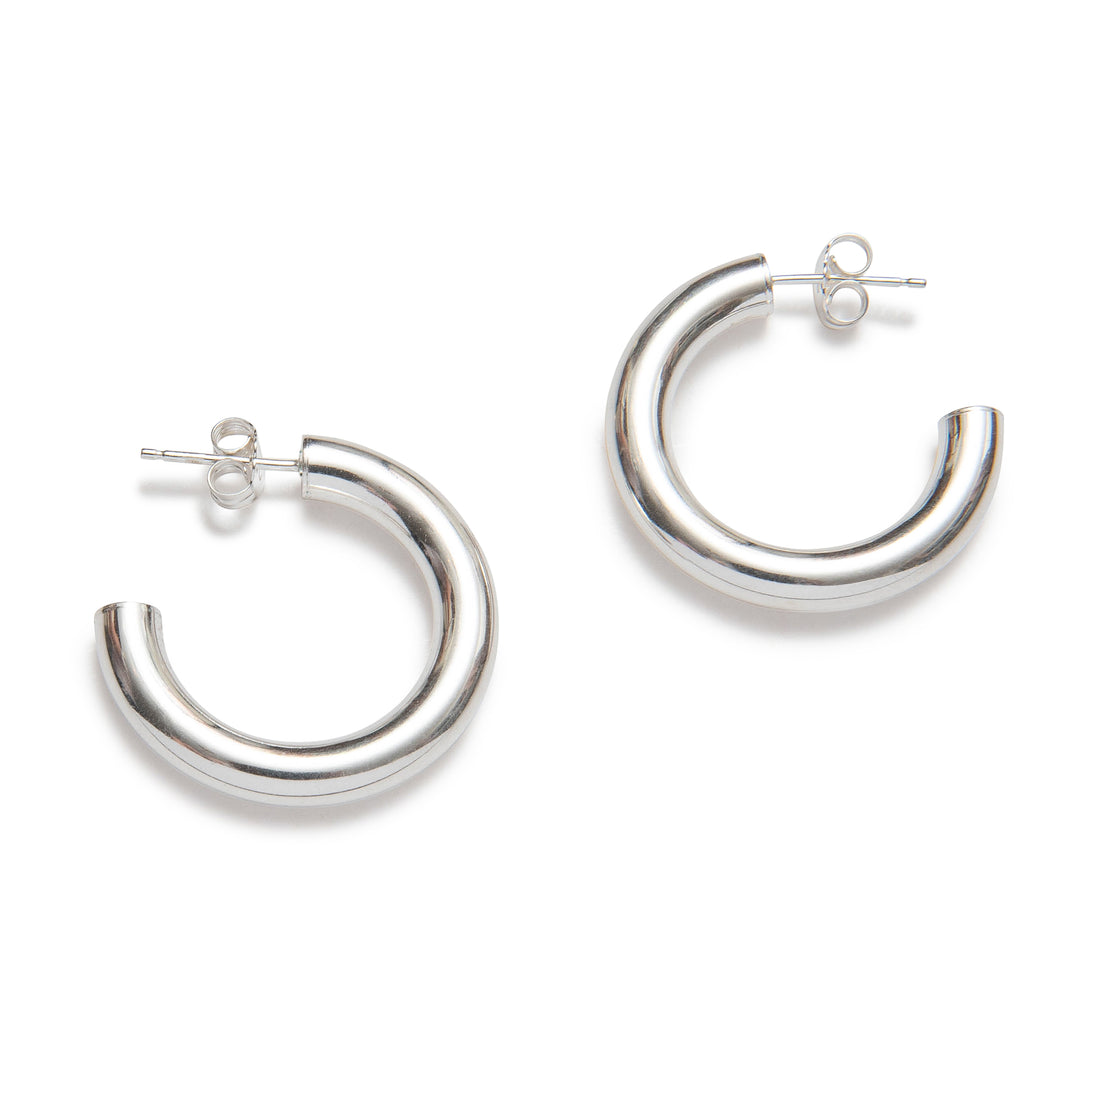 Earrings 1581 (Medium) - Silky Haze